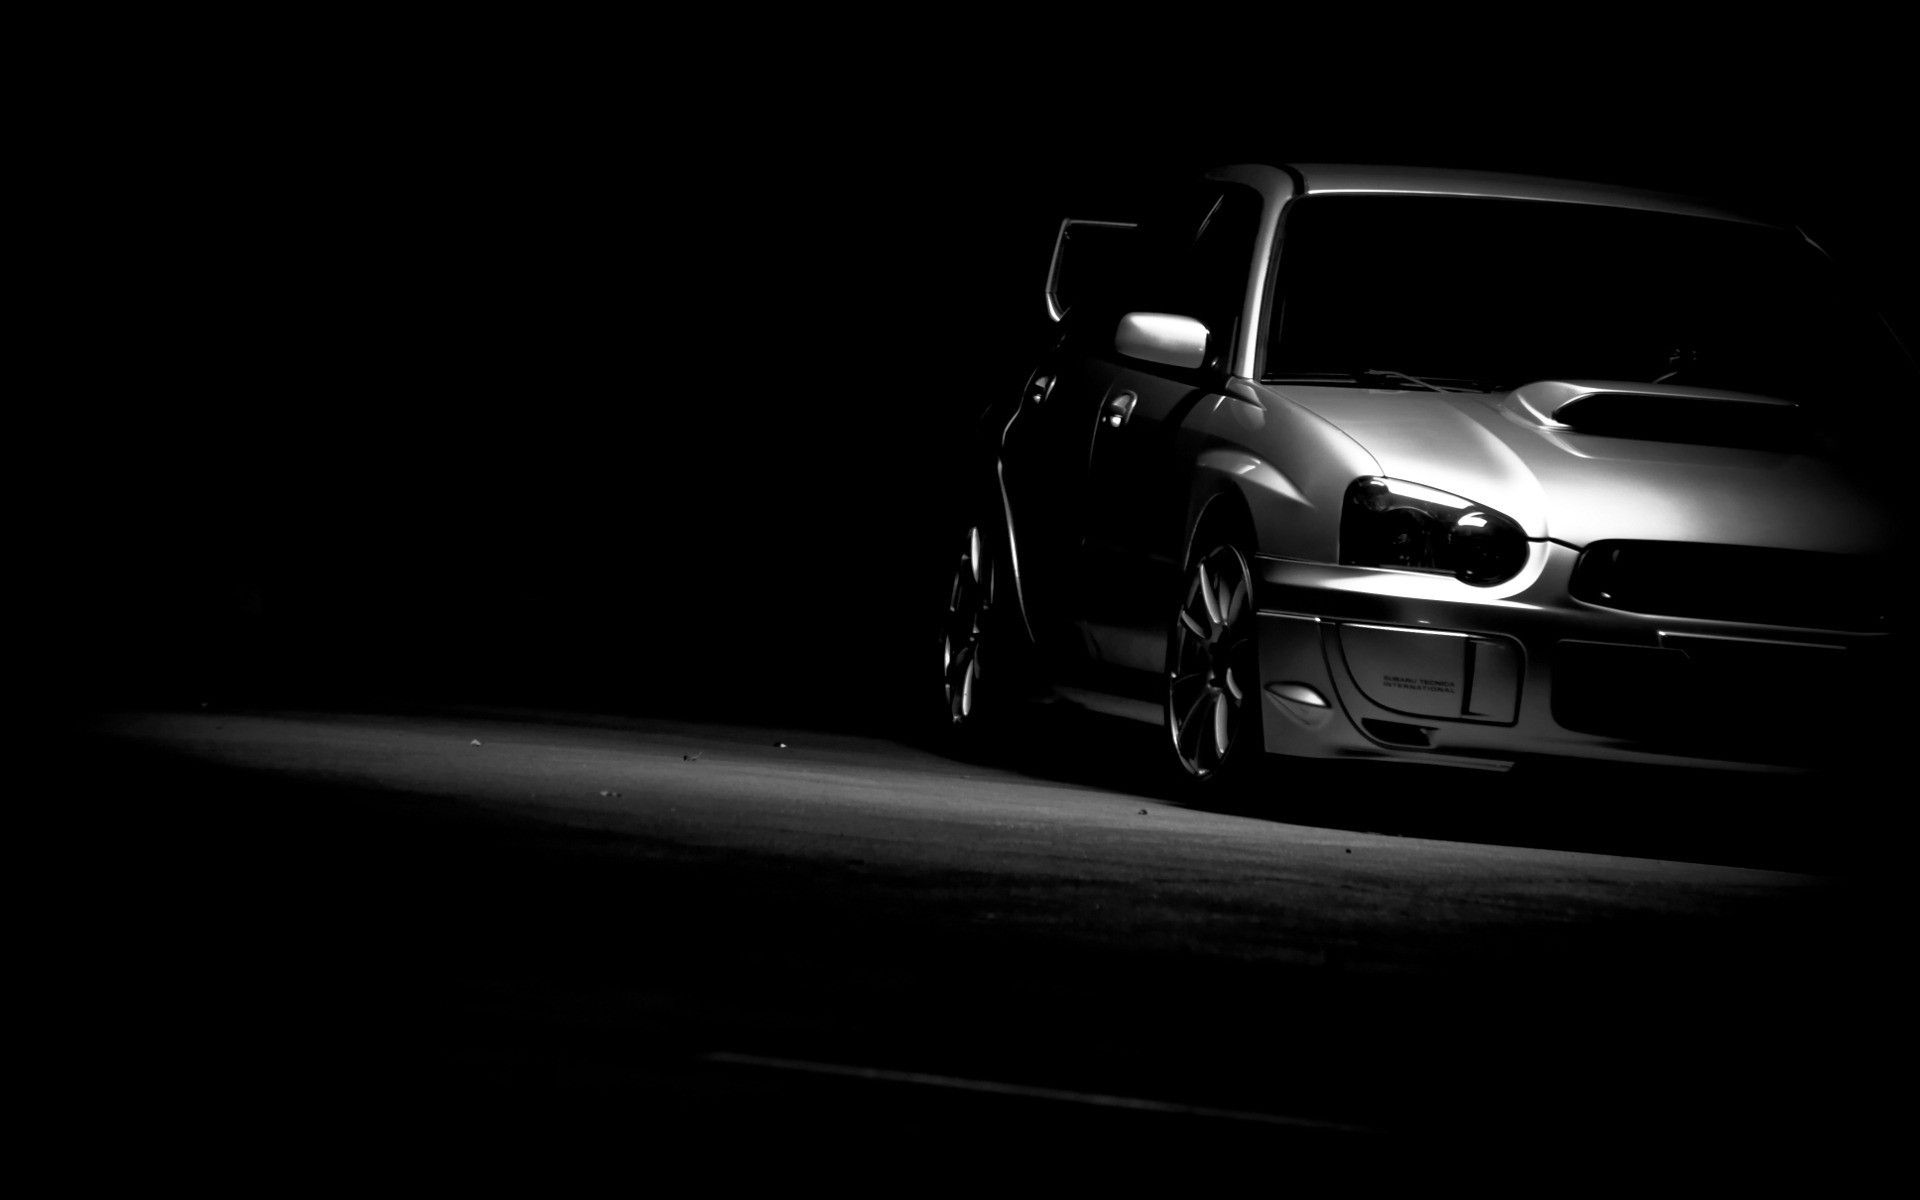 Subaru Impreza Wrx STI Images For PC Download 16546 Full HD